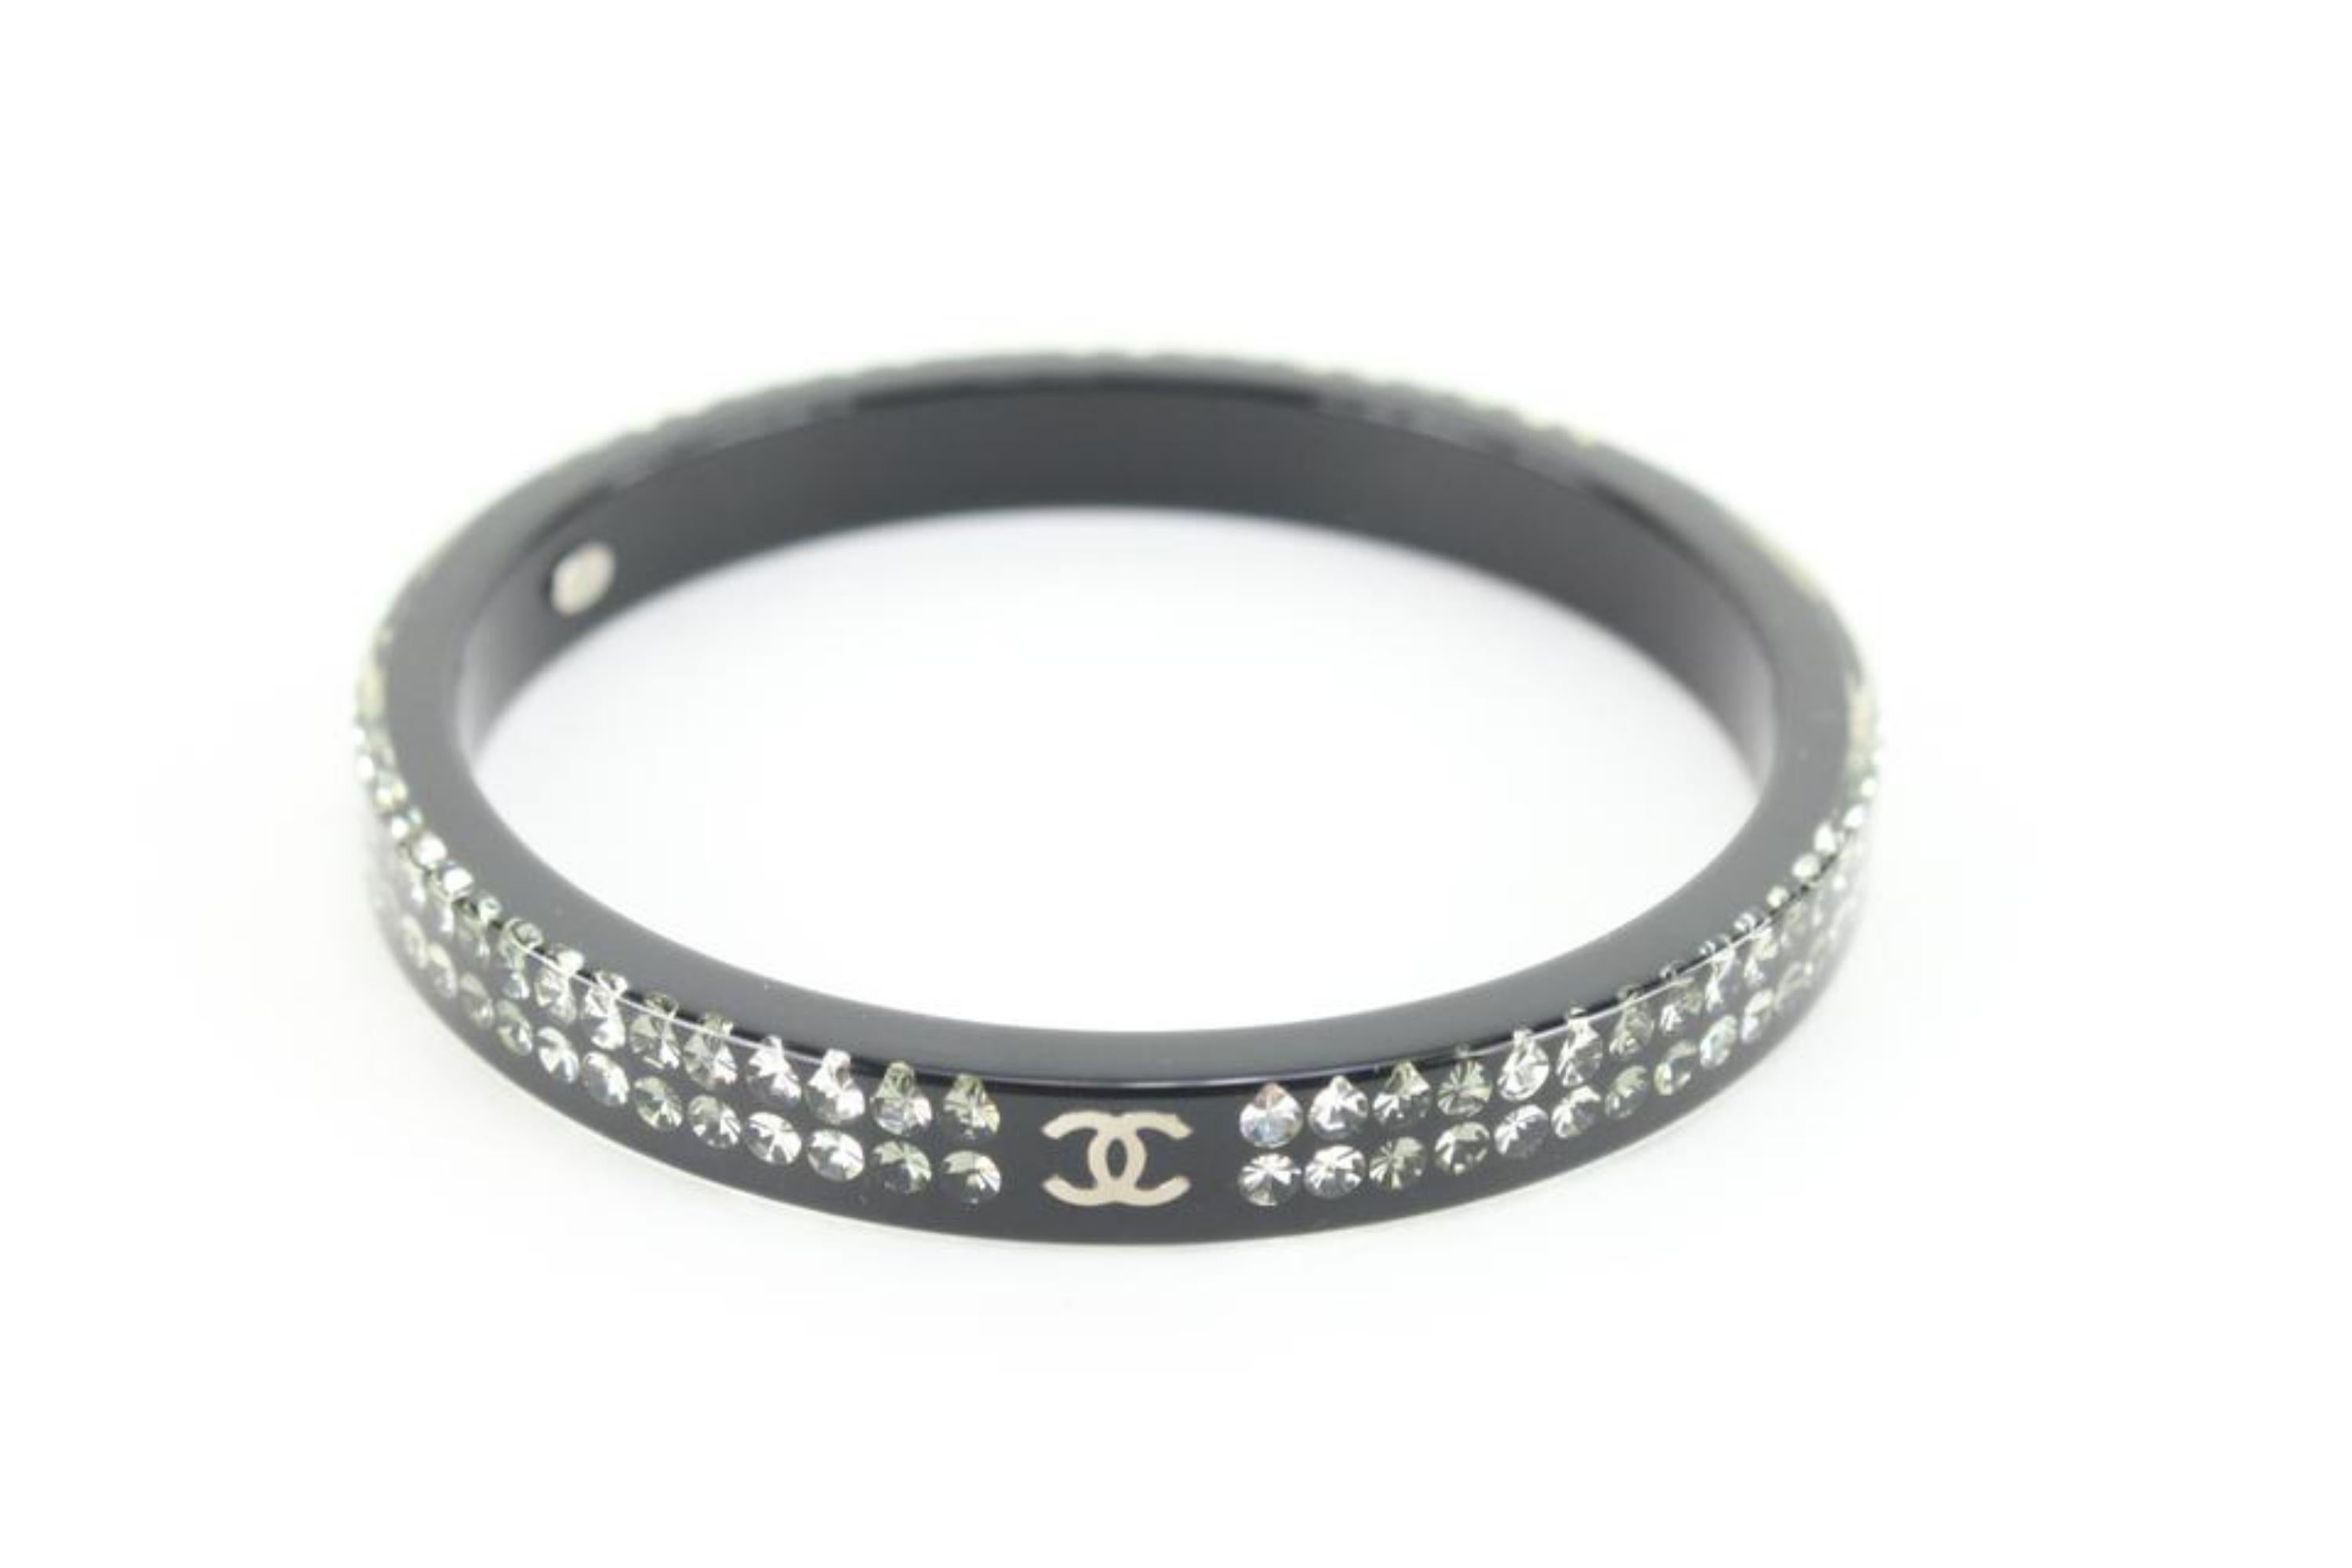 Chanel 2011 Black Crystal CC Logo Bangle Bracelet 26ck824s 6